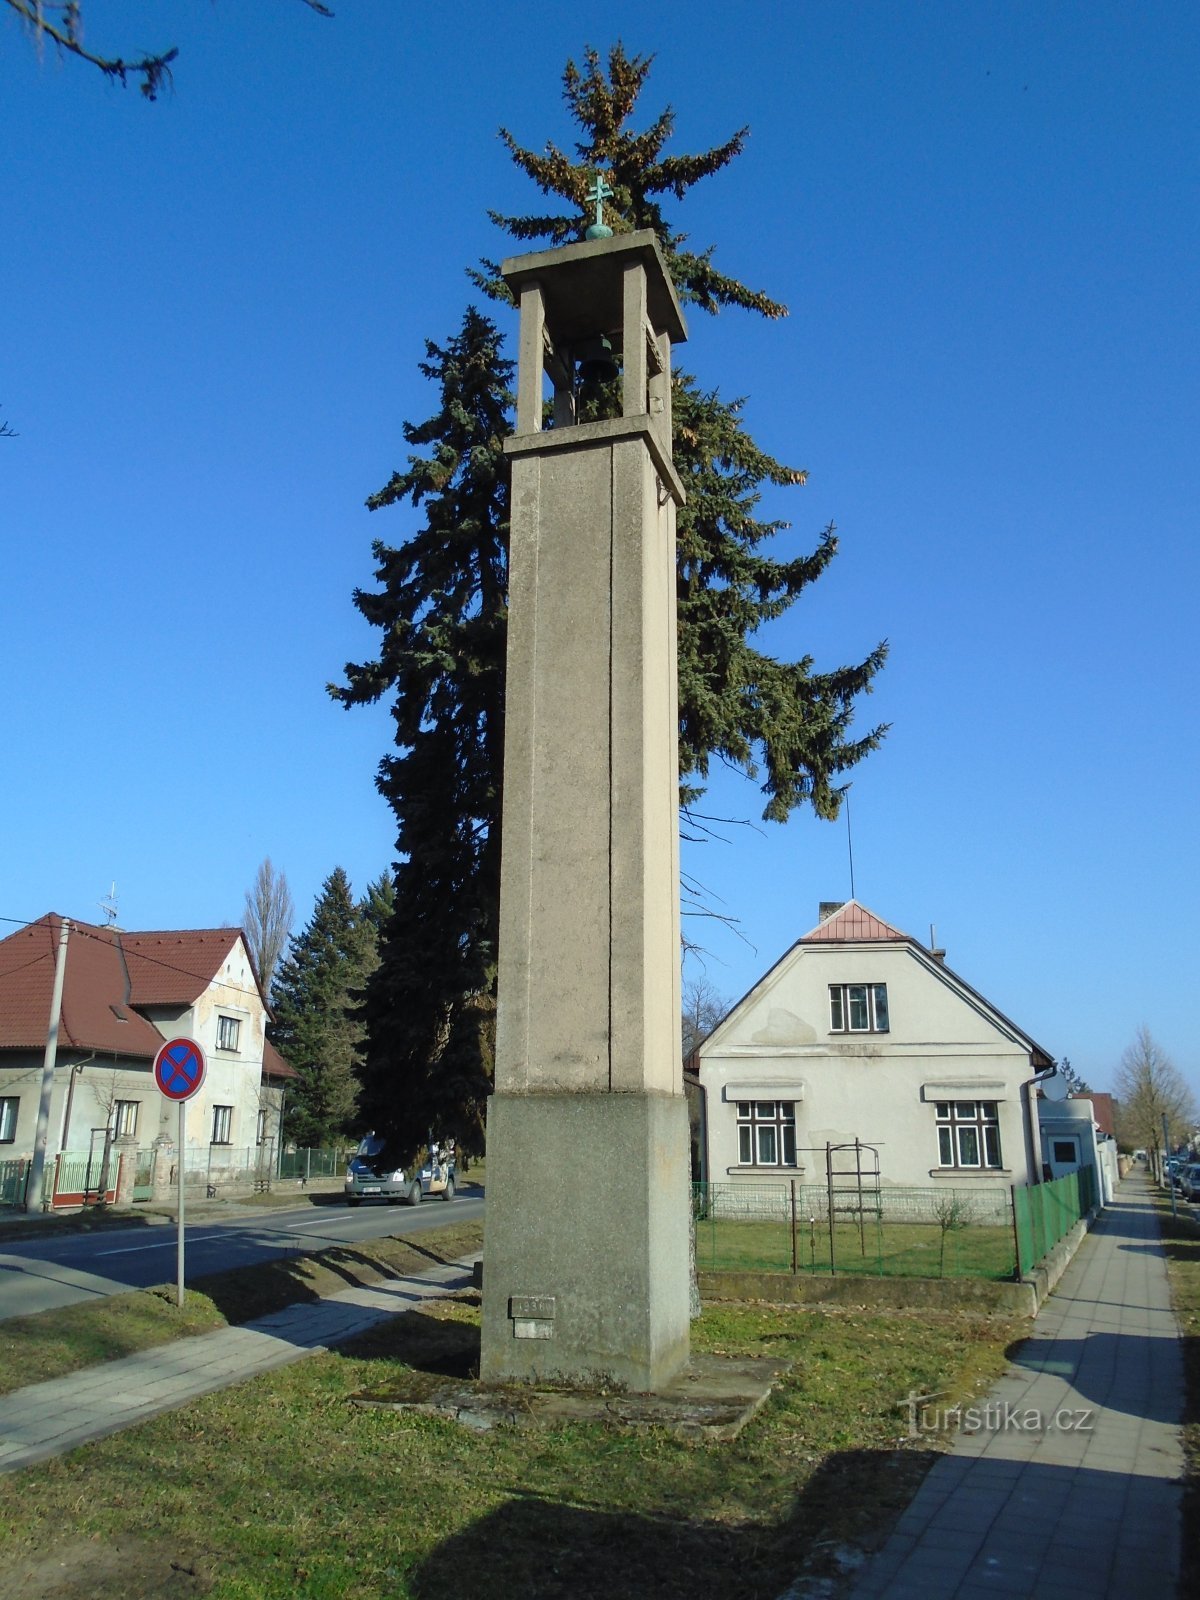 Tháp chuông ở Pouchov (Hradec Králové, 22.2.2018/XNUMX/XNUMX)